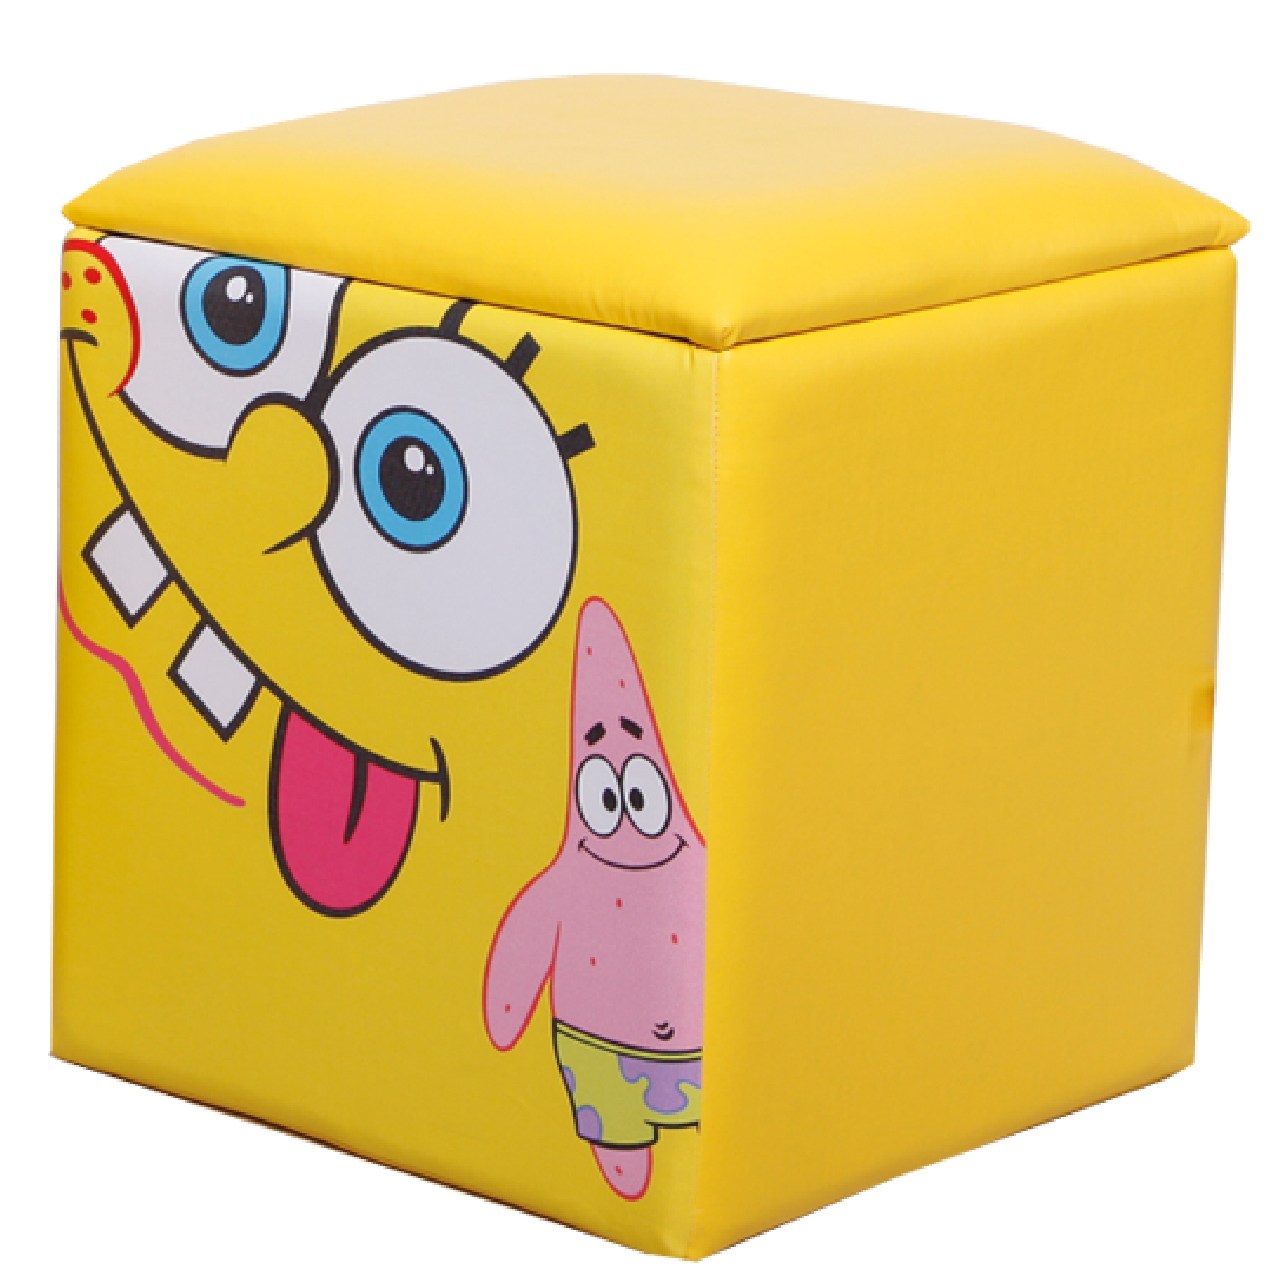 جلو مبلی کودک پینک مدل Spongebob